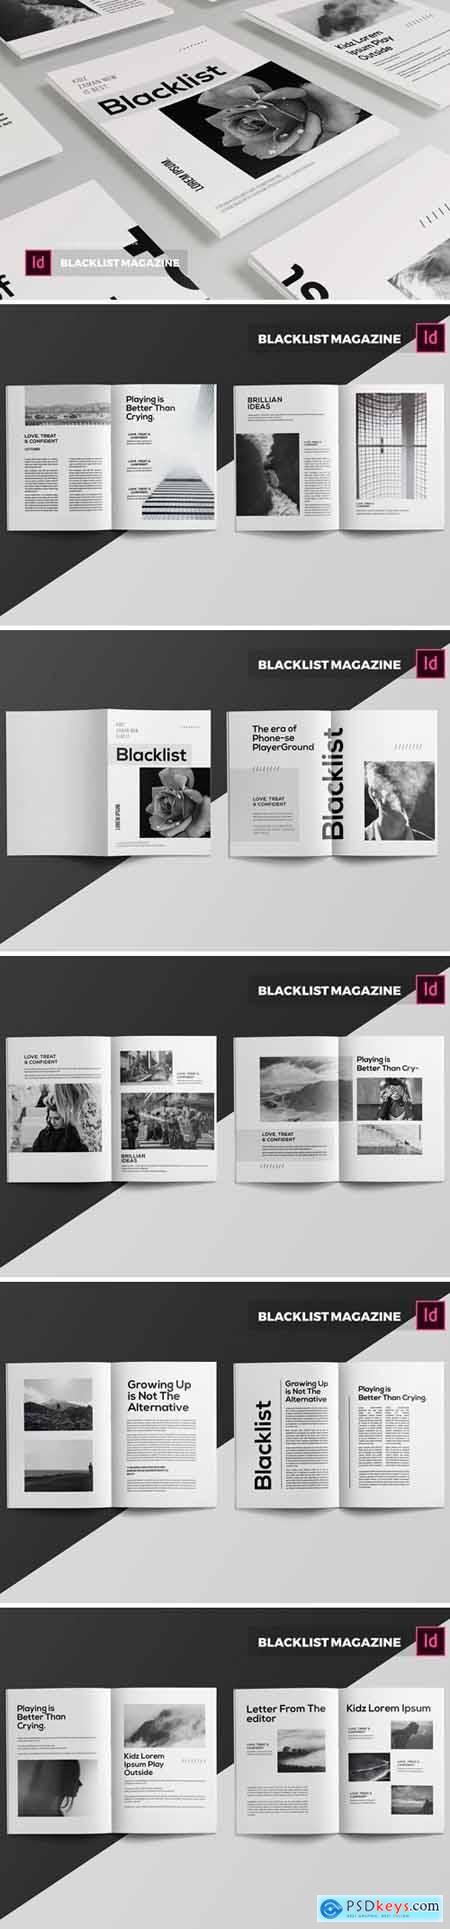 Blacklist Magazine Template